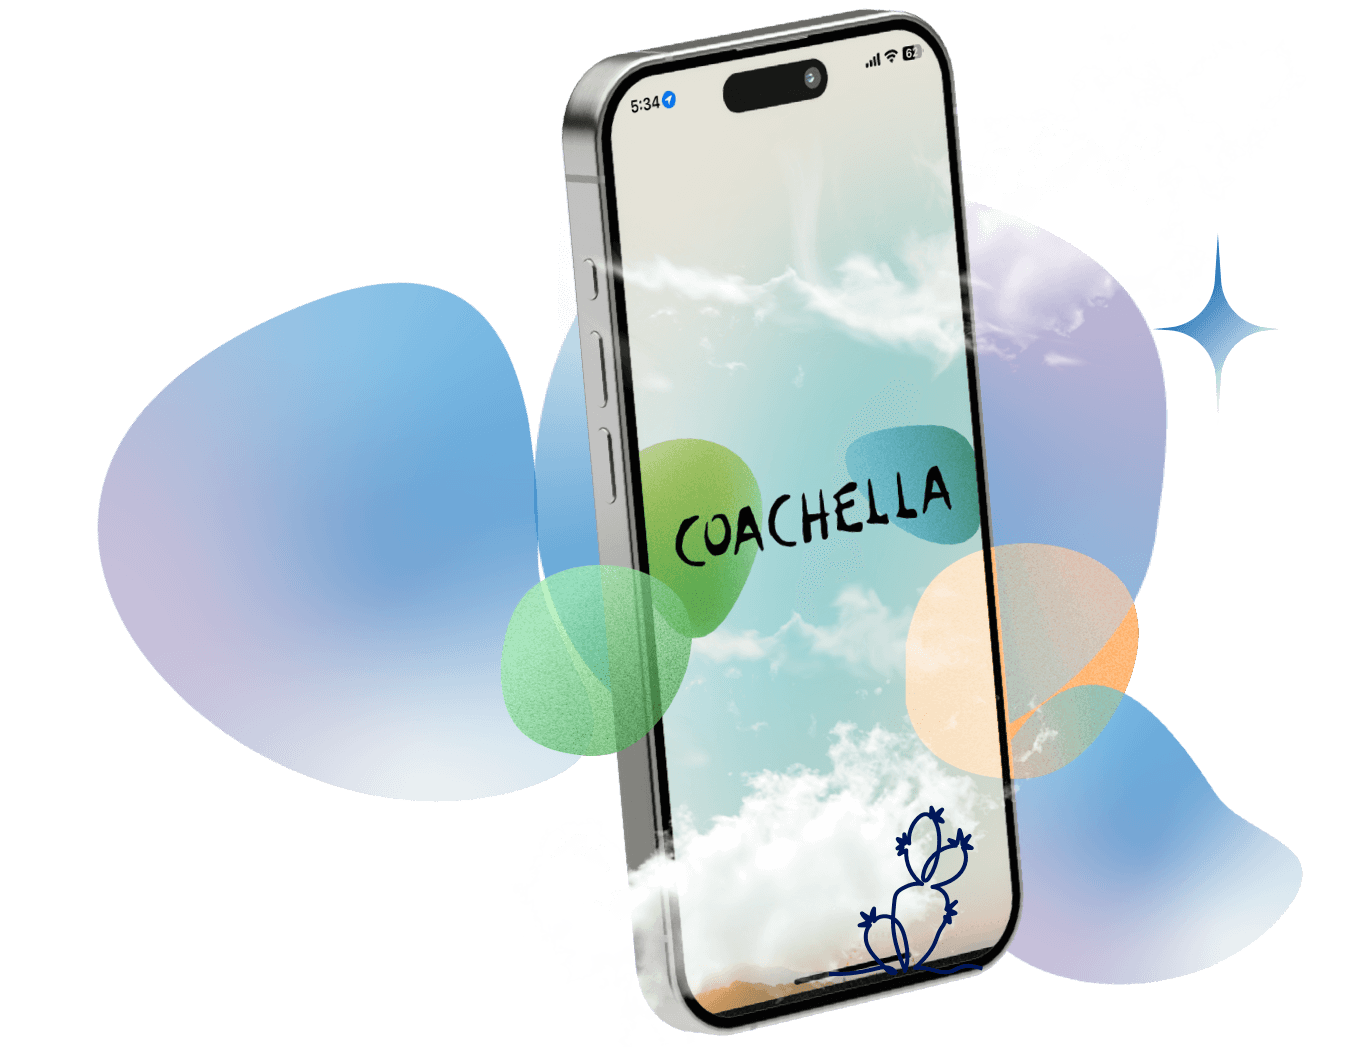 Coachella Application Displayed on a Phone